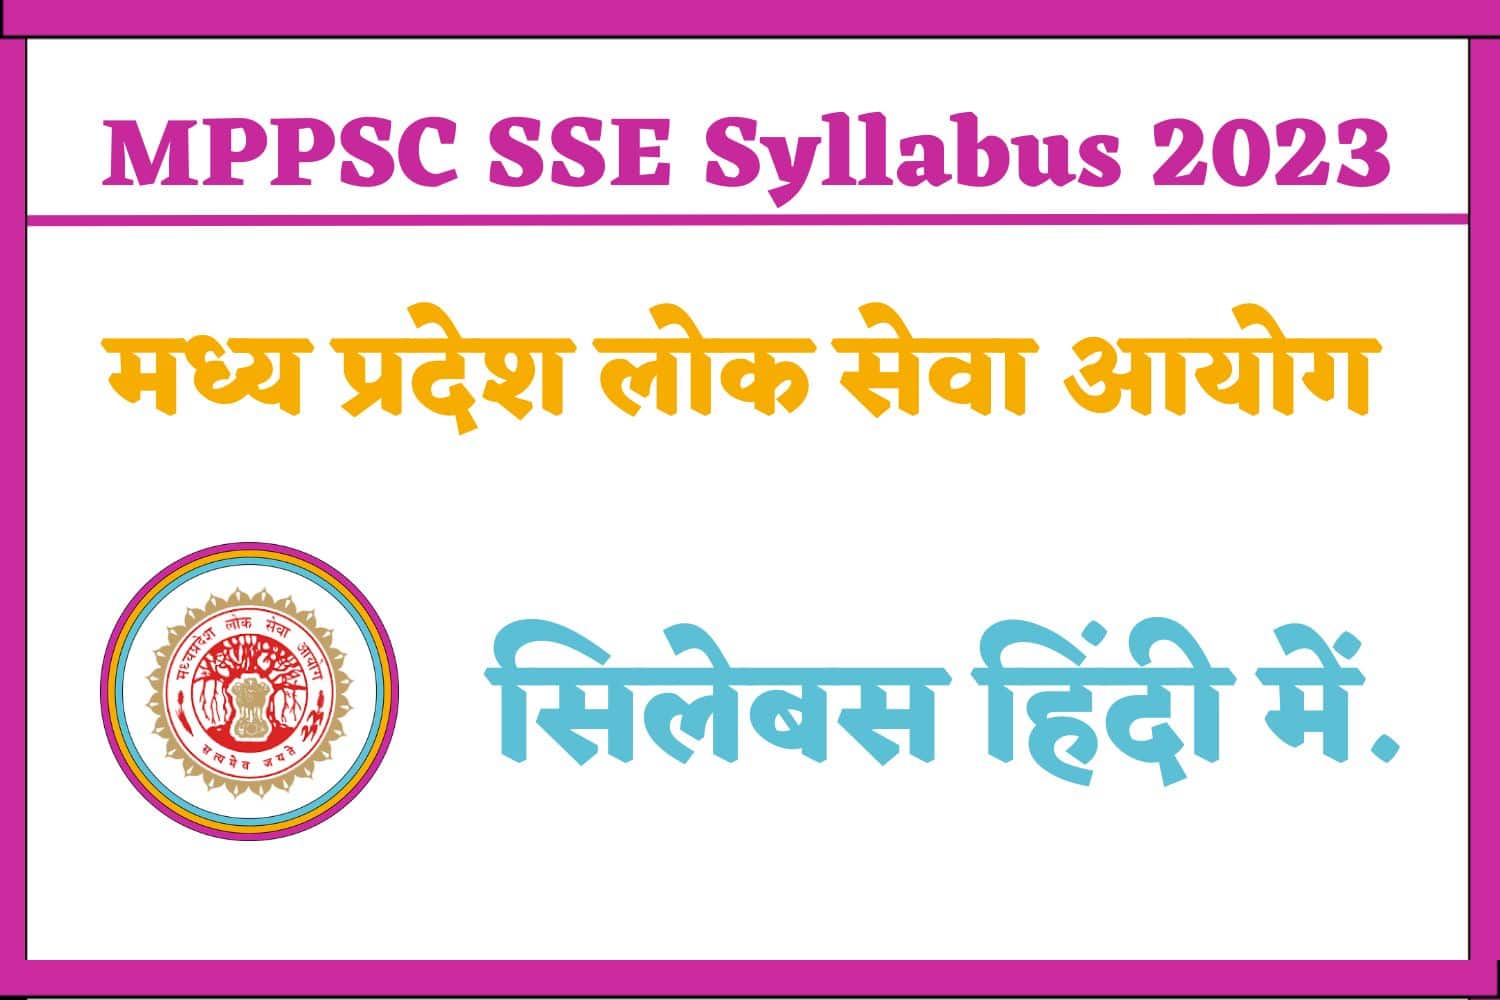 MPPSC SSE Syllabus 2023 in Hindi